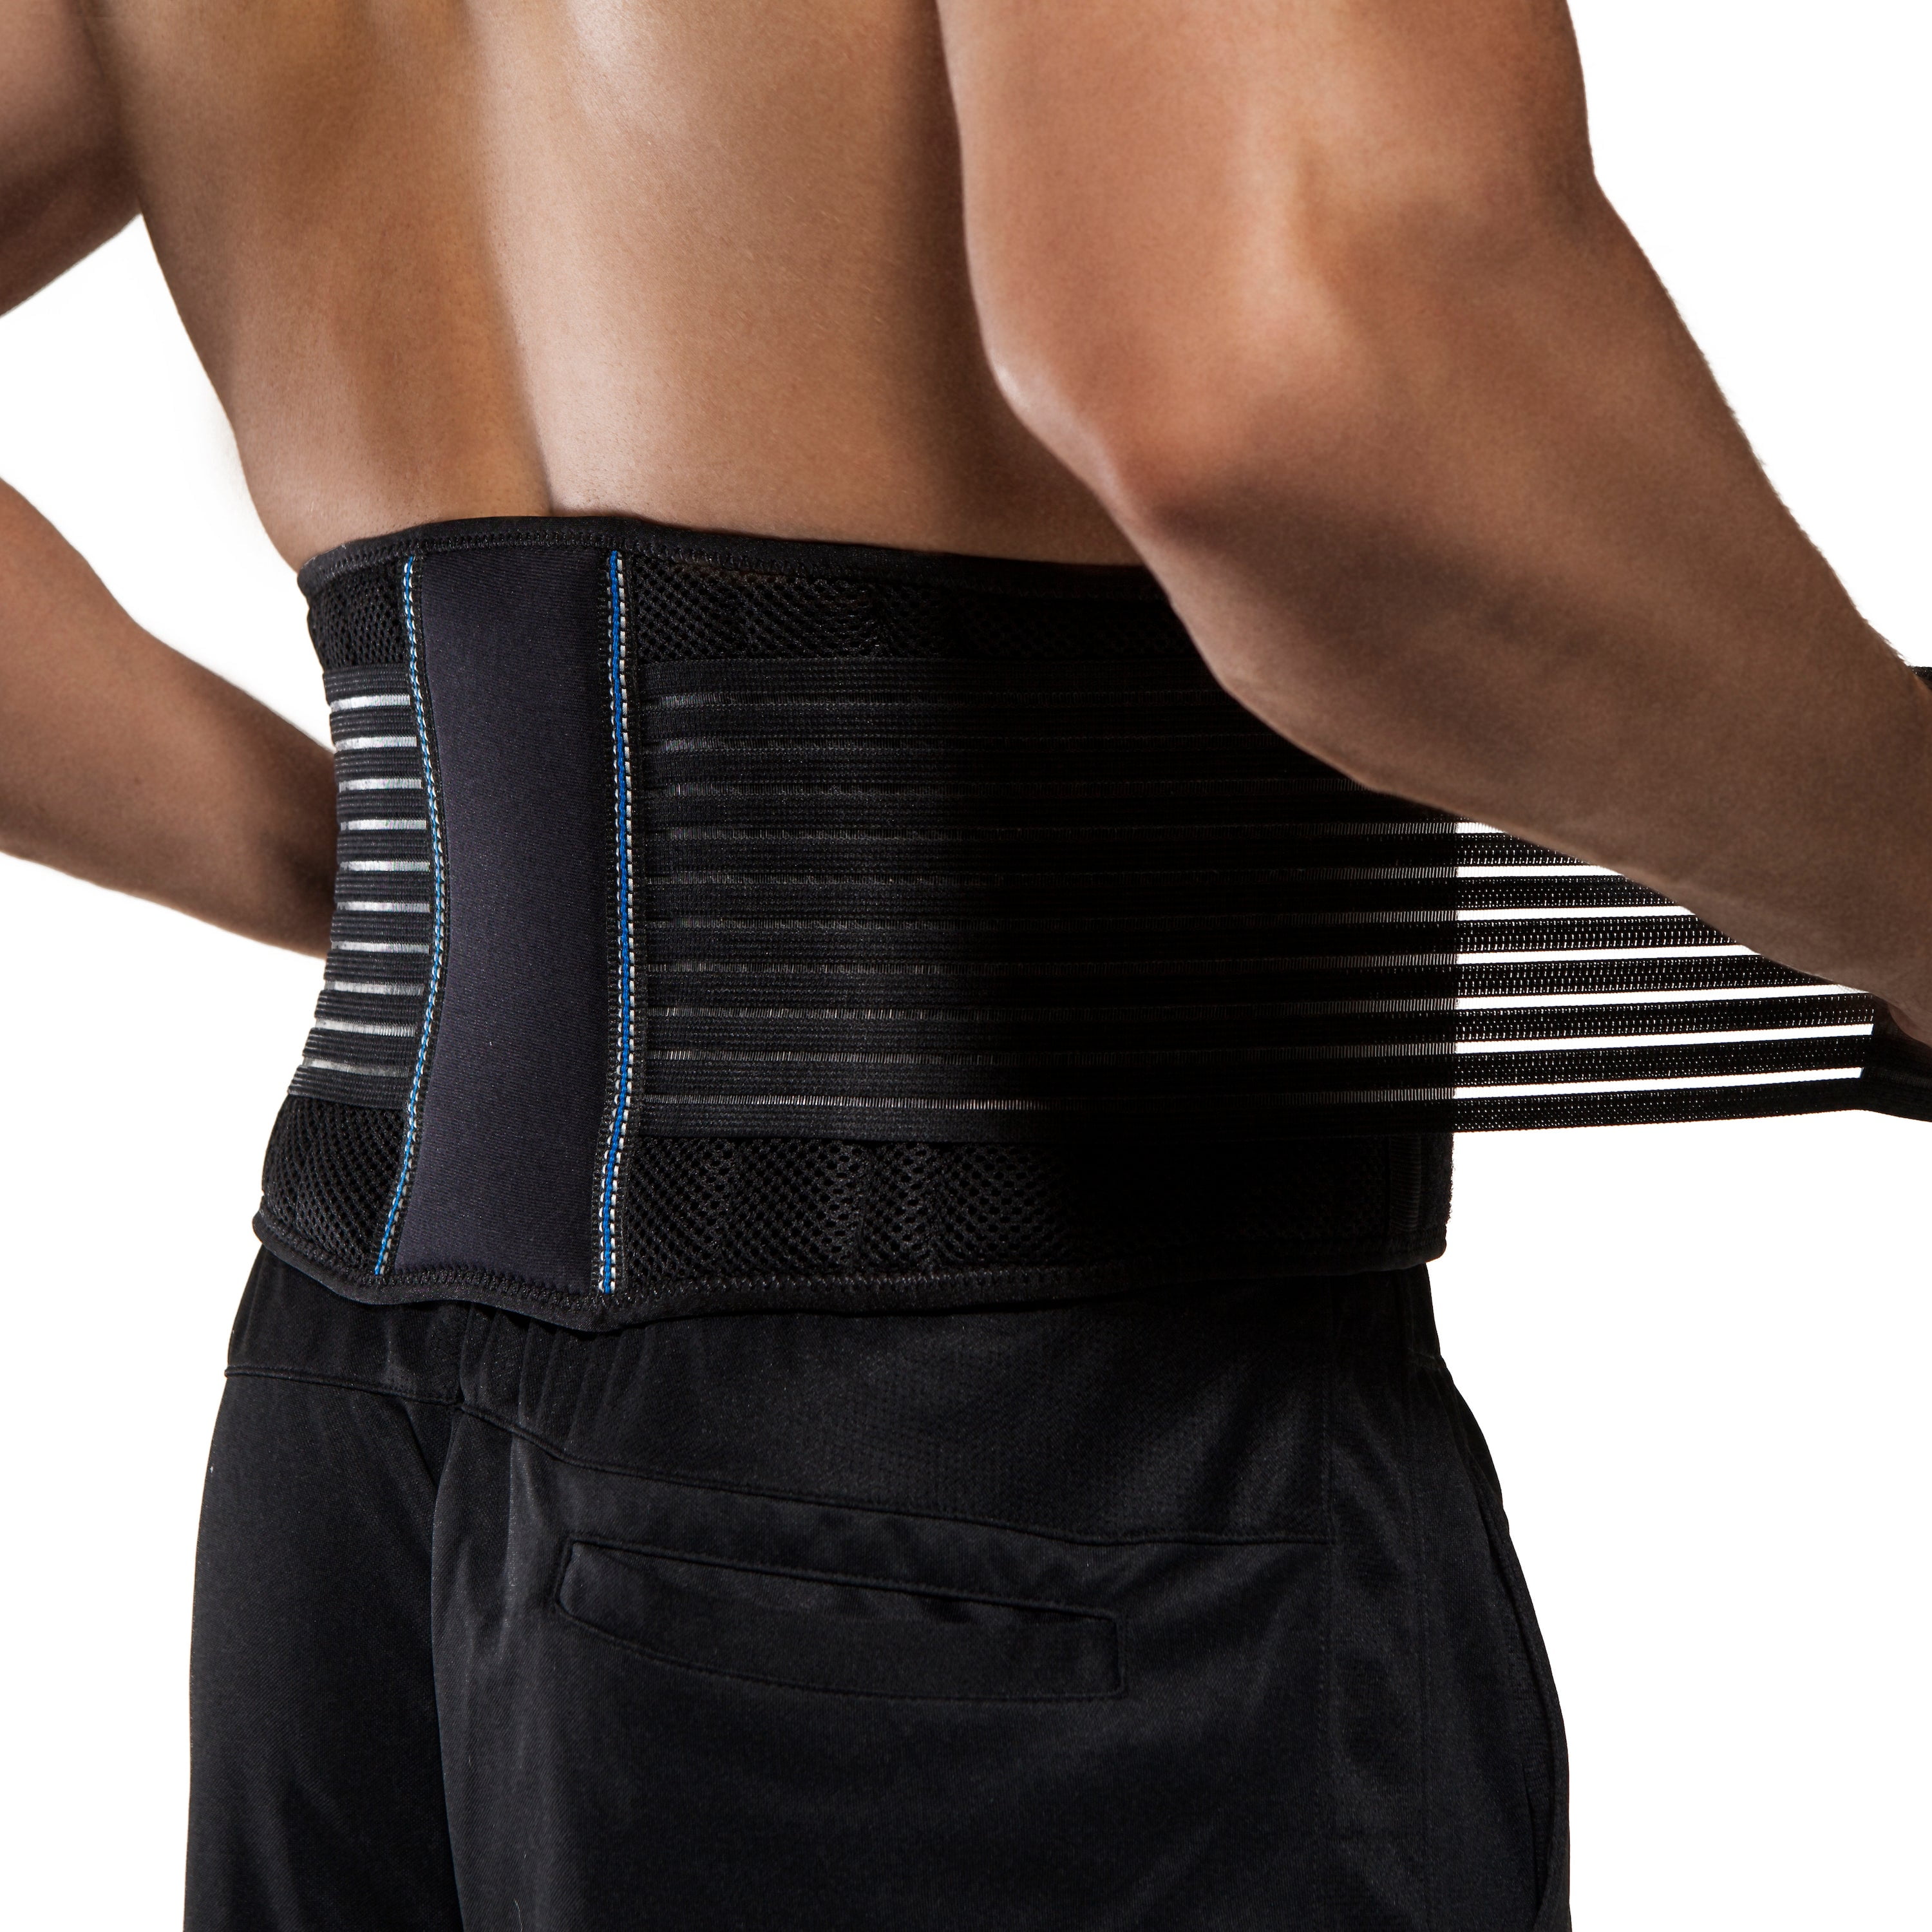 KDD Lower Back Brace, Adjustable Lumbar Support Belt, 9.8 Extra